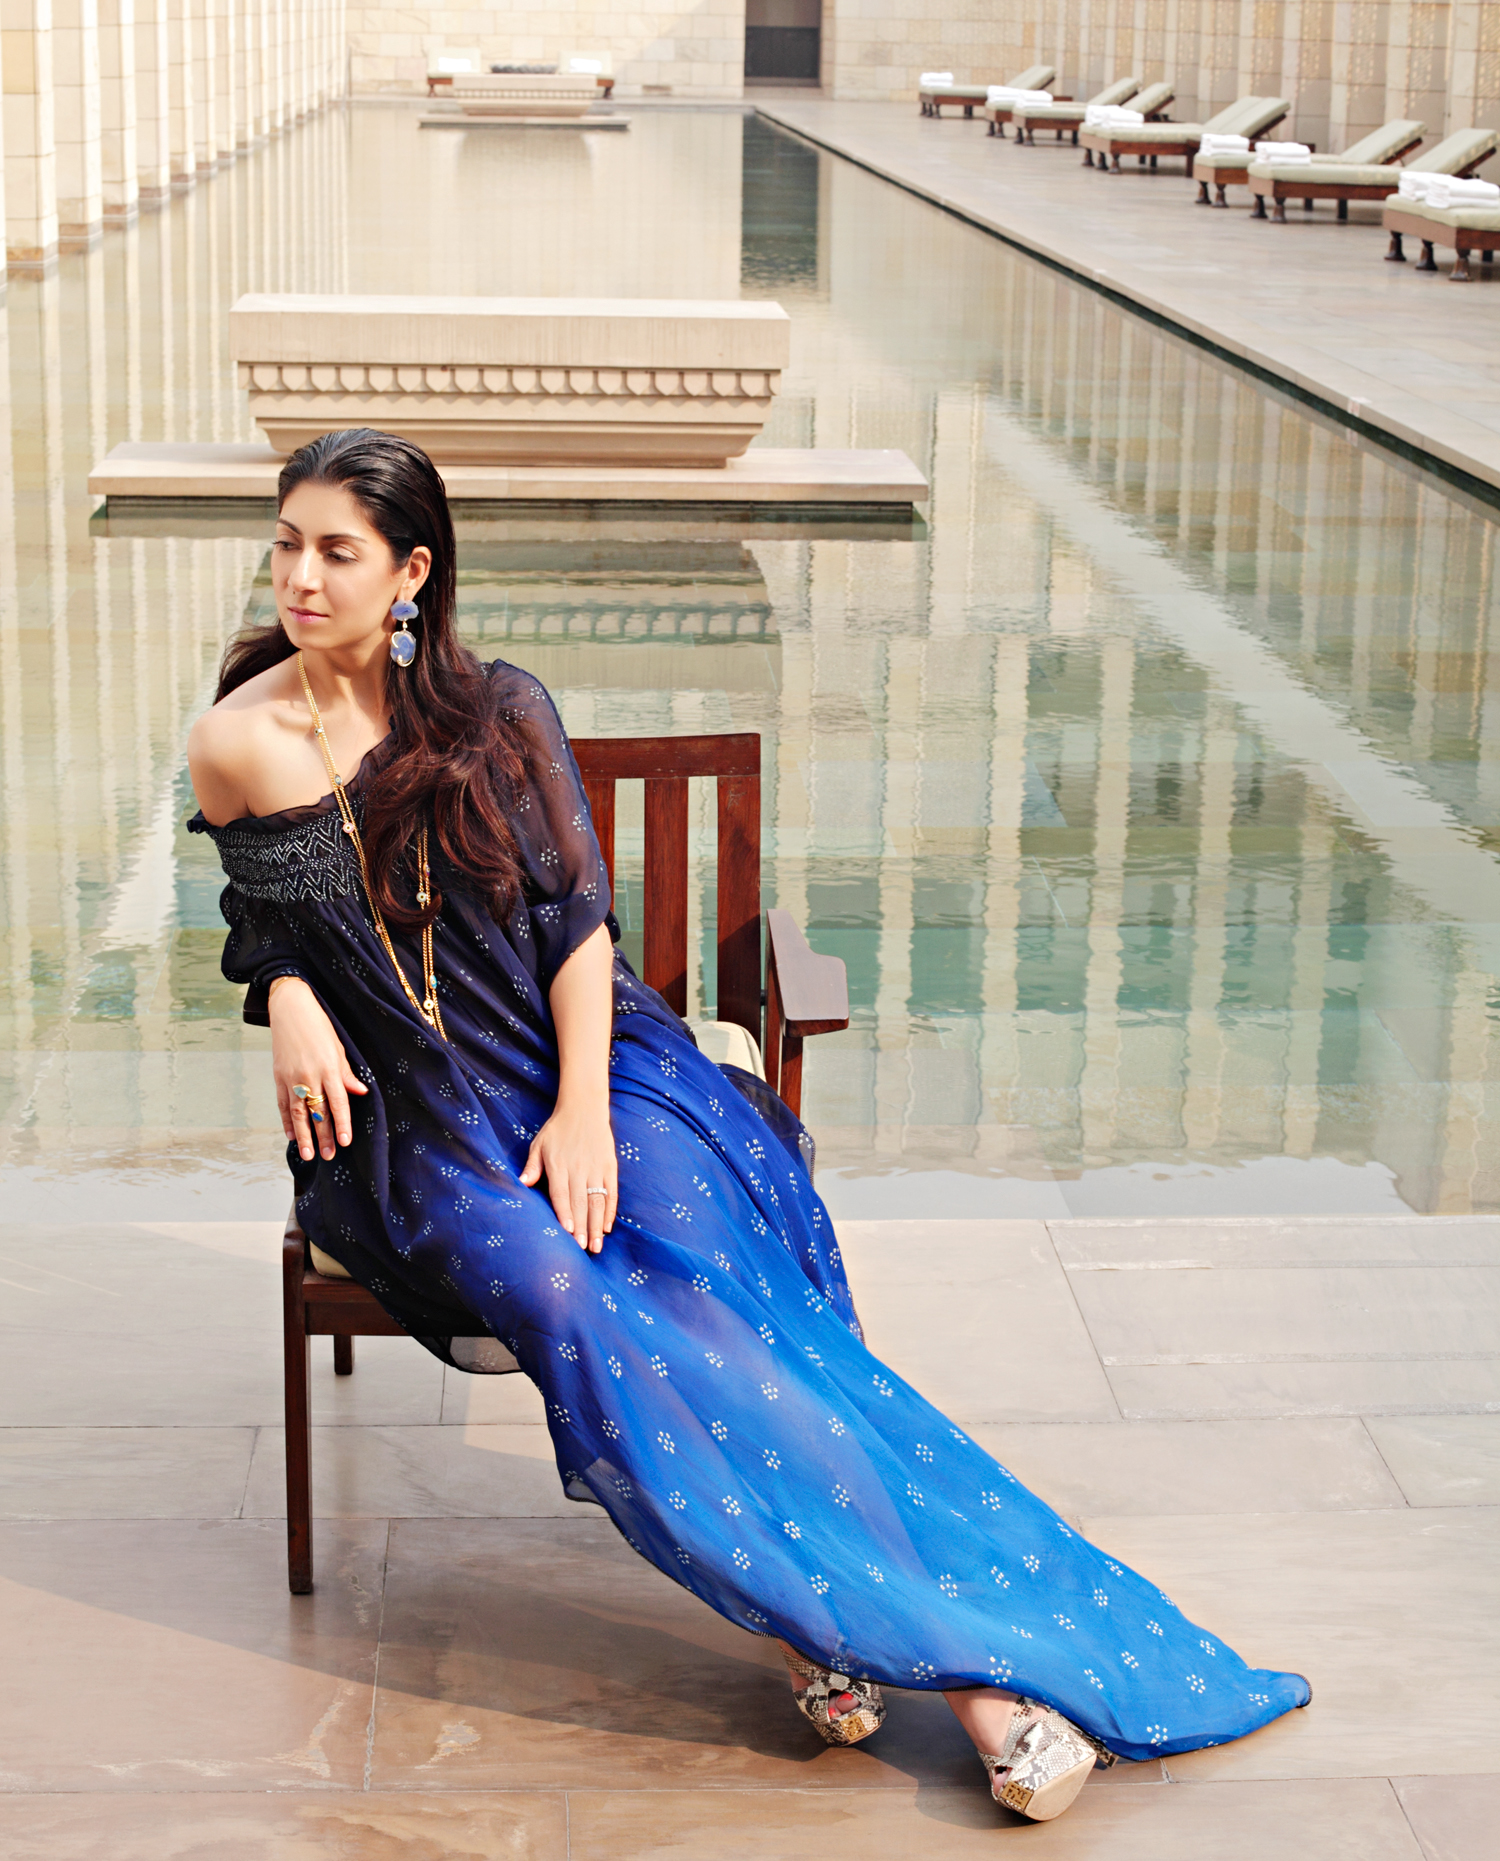  Anupi Oberoi, society wedding planner   Harper's Bazaar India  